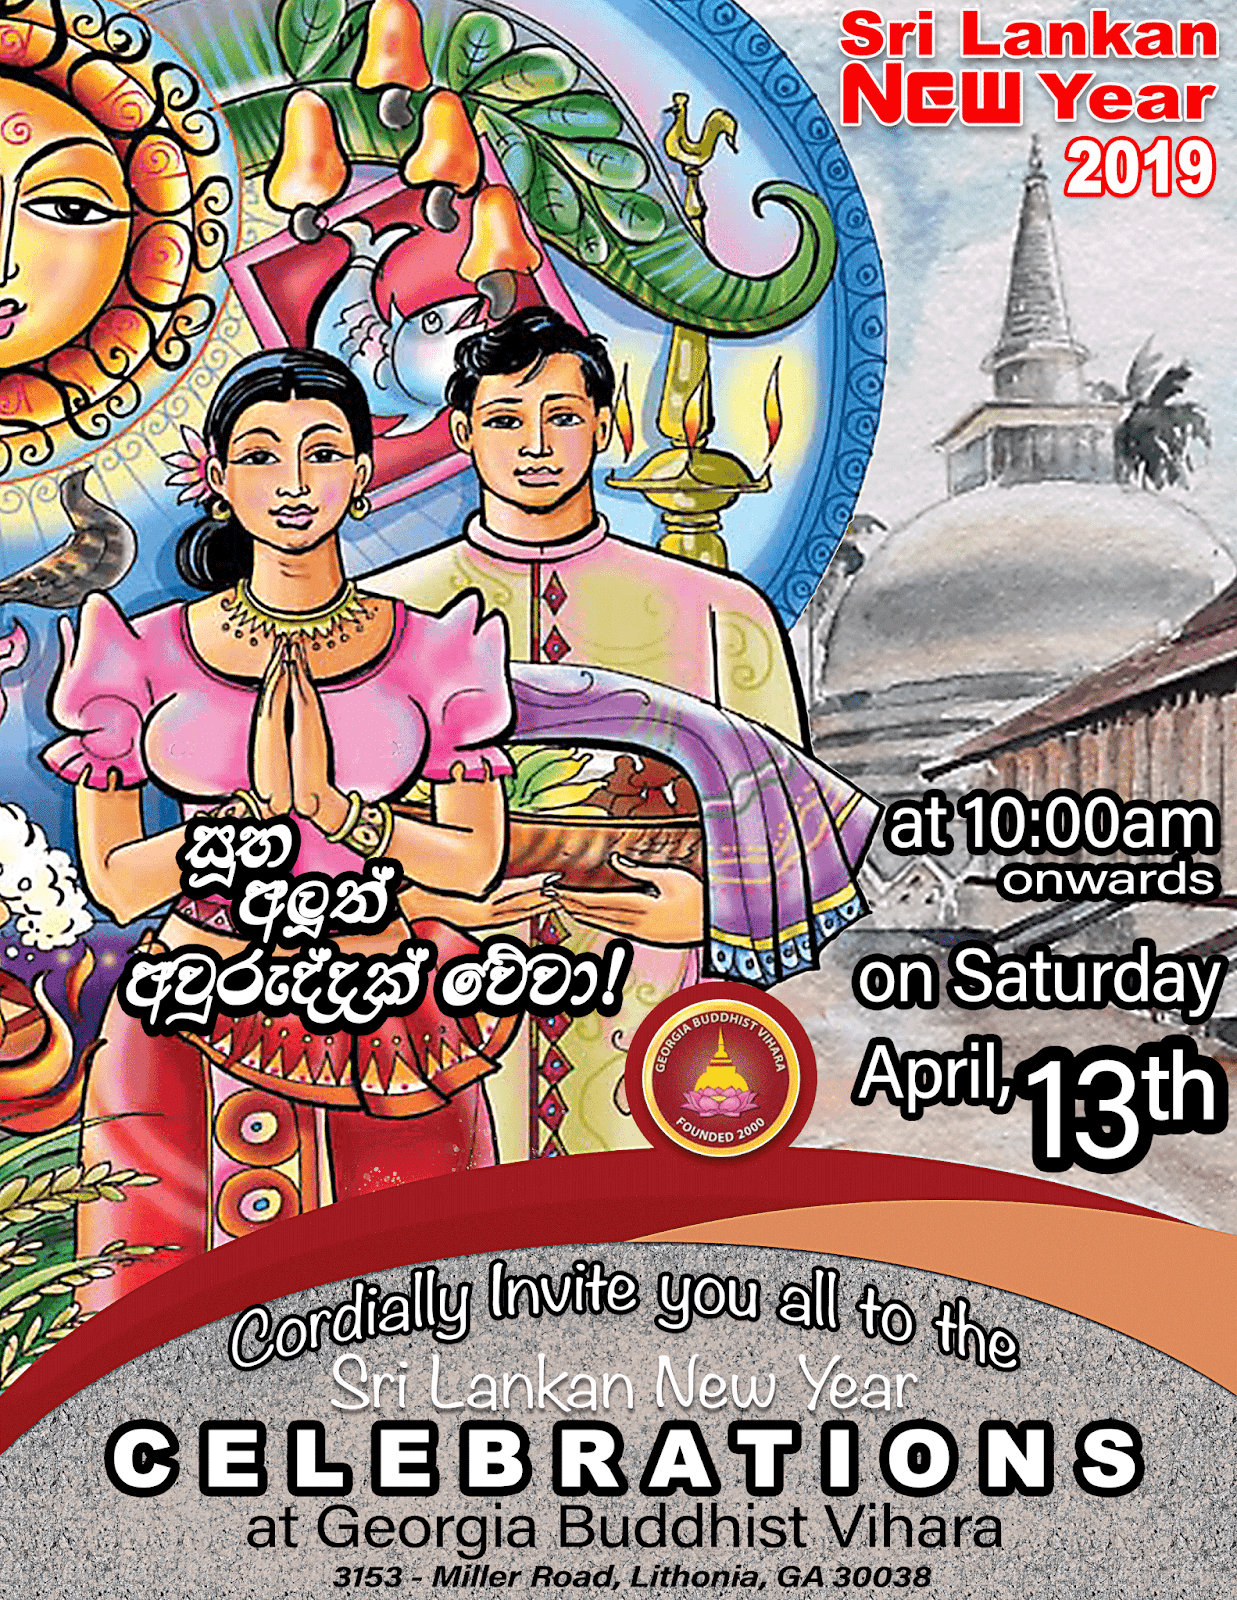 Sri Lankan New Year 2019 Georgia Buddhist Vihara